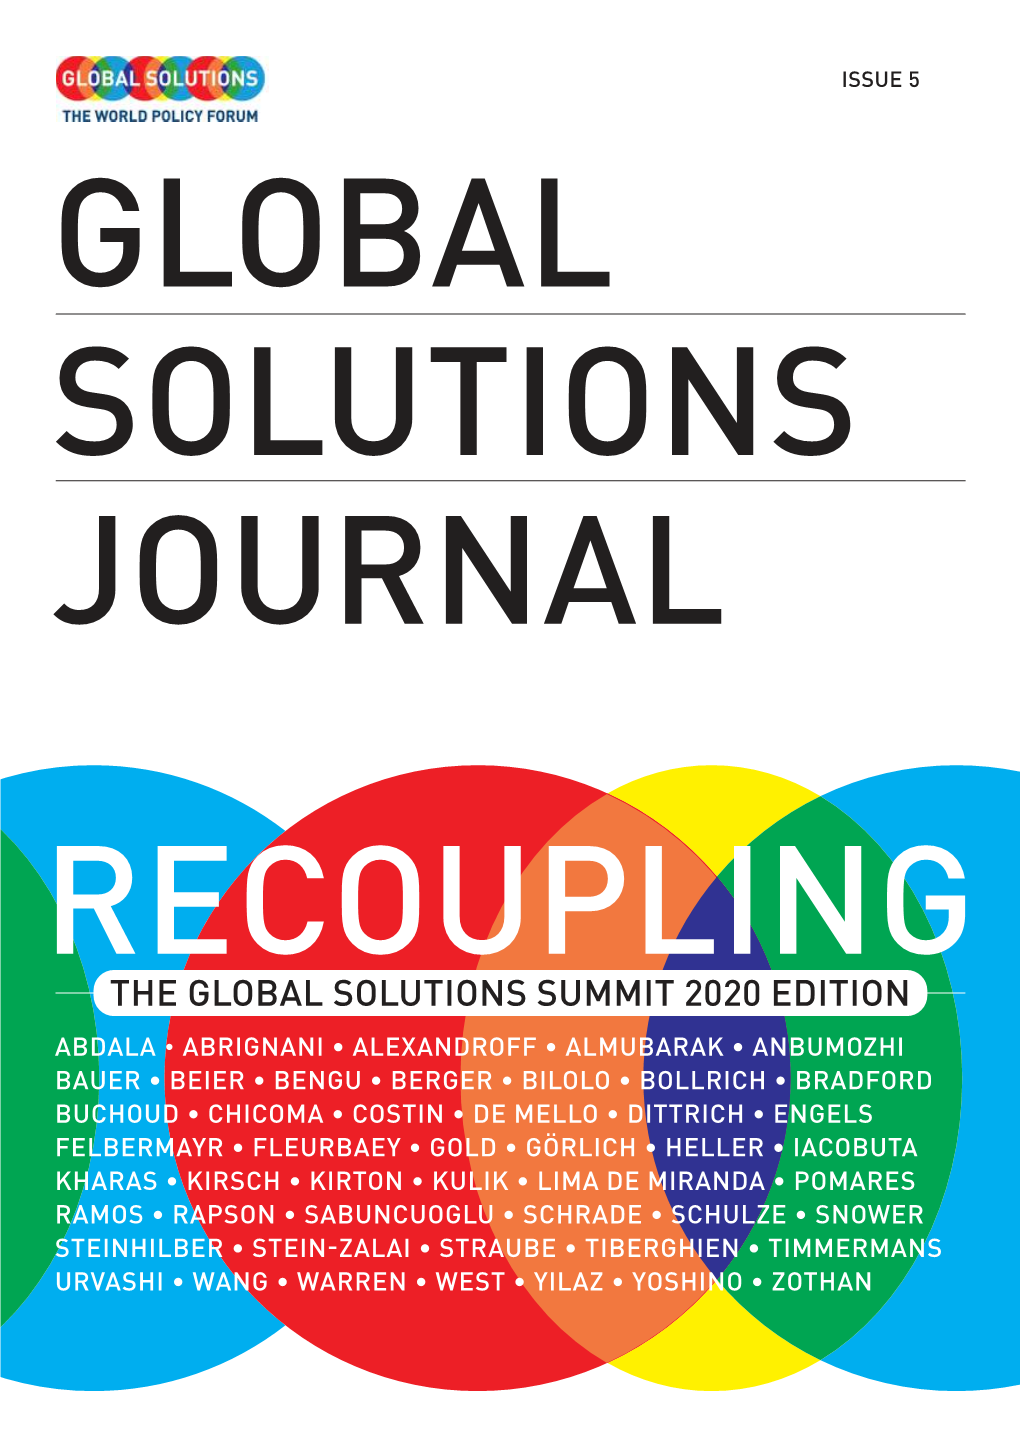 Global Solutions Journal Recoupling